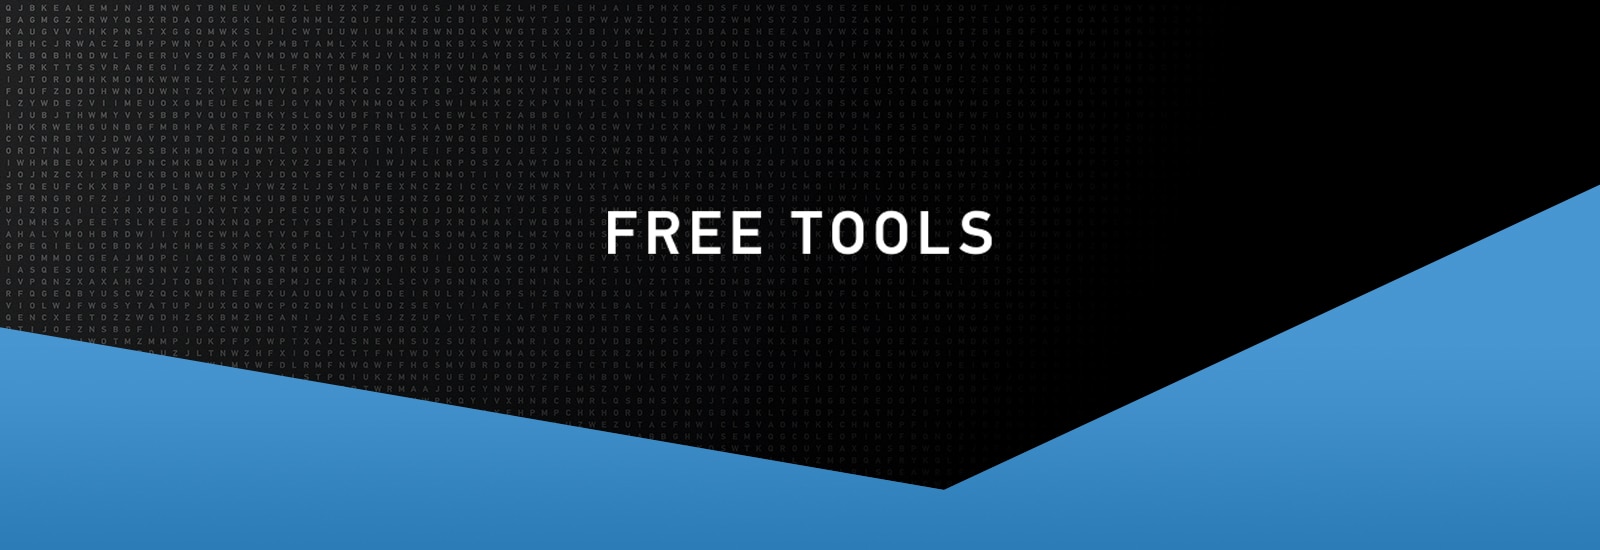 Free Tools Header